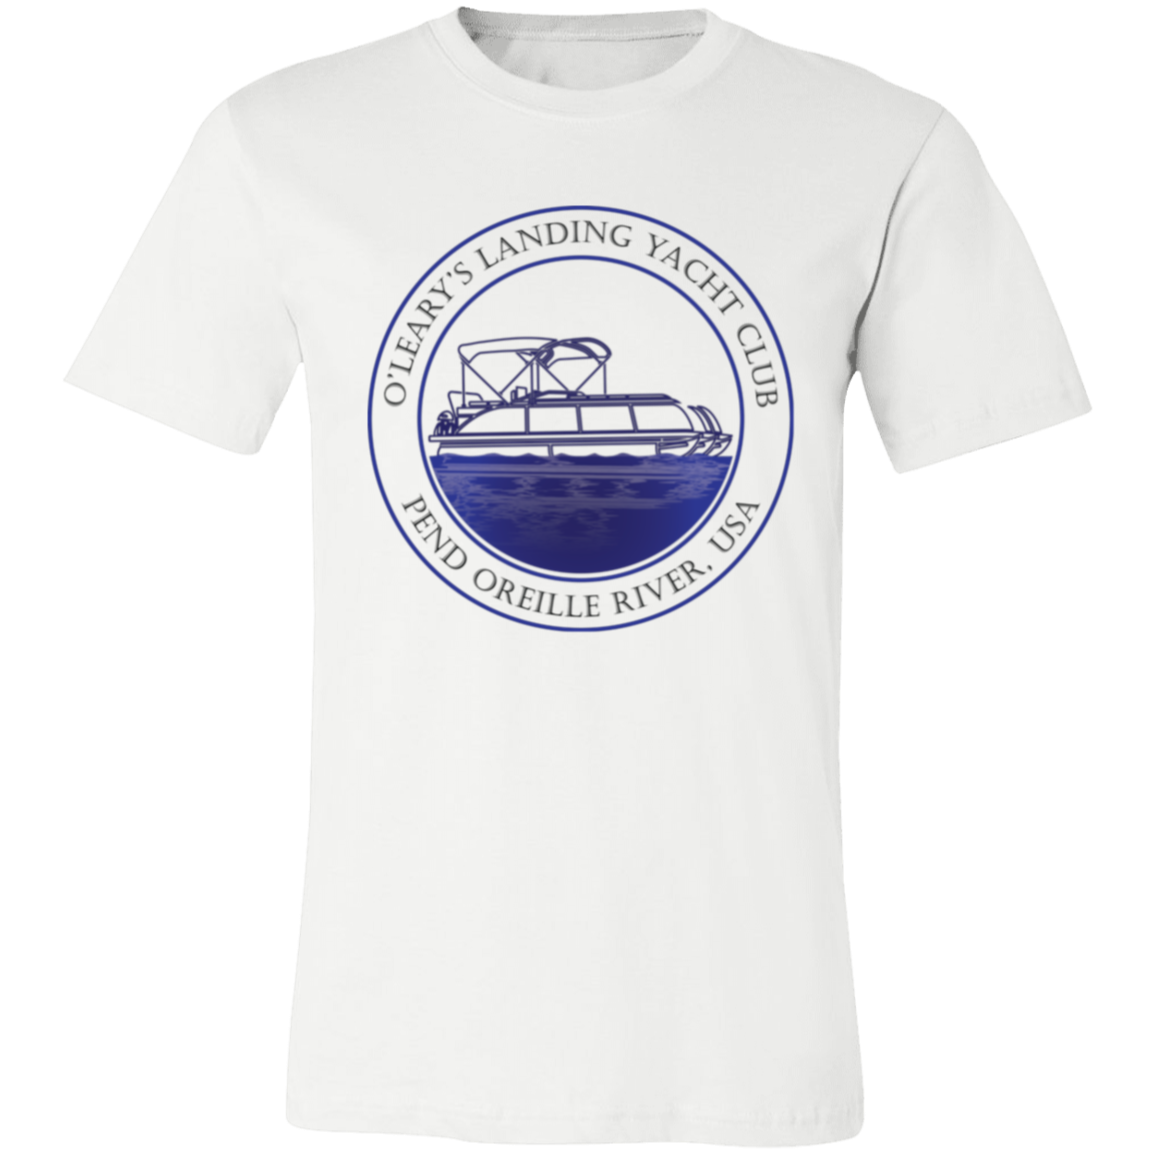 O'Leary's Landing Yacht Club - Shirt